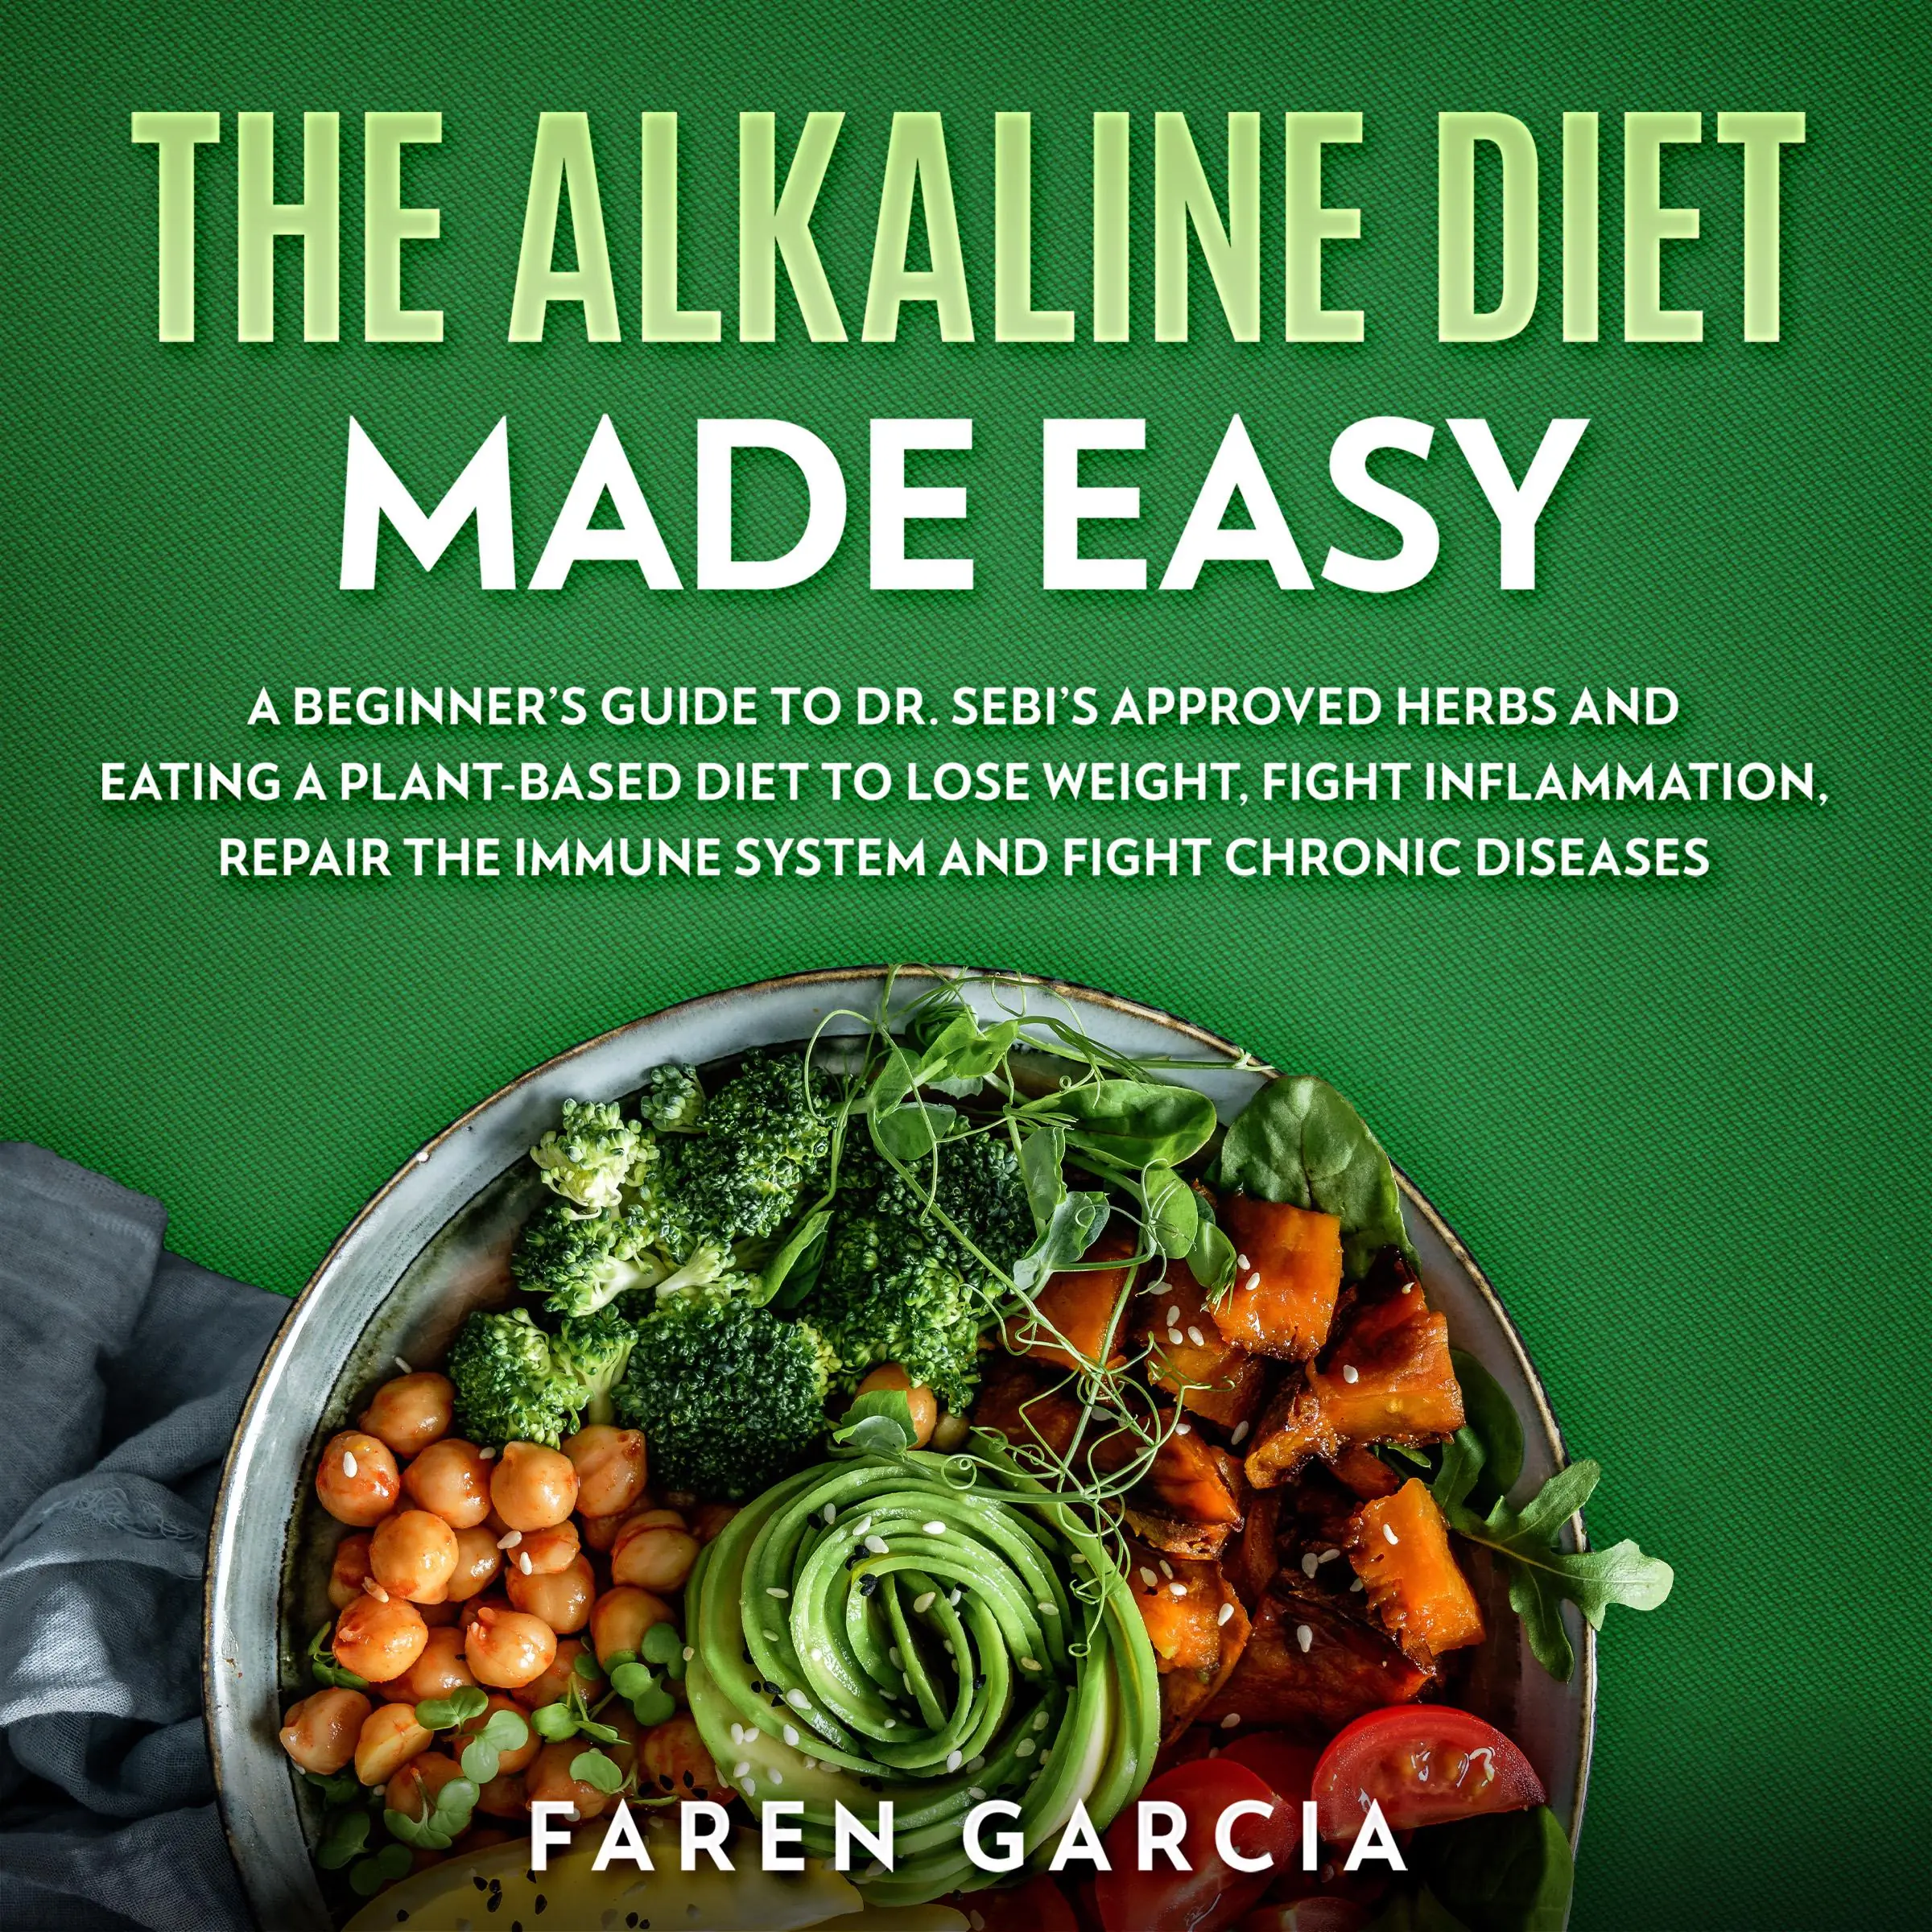 The Alkaline Diet Made Easy Audiobook by Faren Garcia